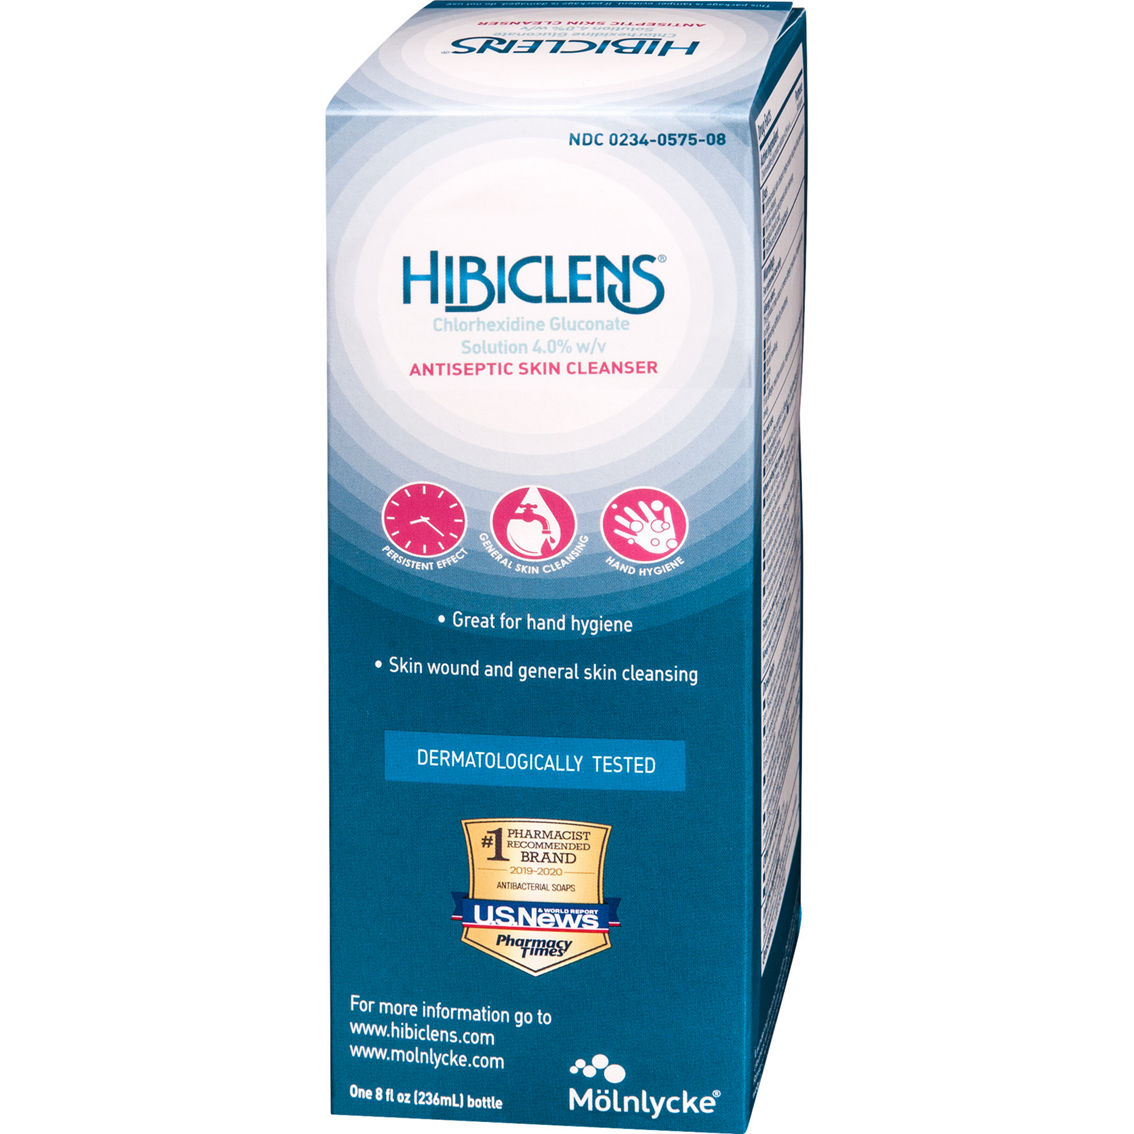 Hibiclens Antiseptic Skin Cleanser - Image 5 of 6